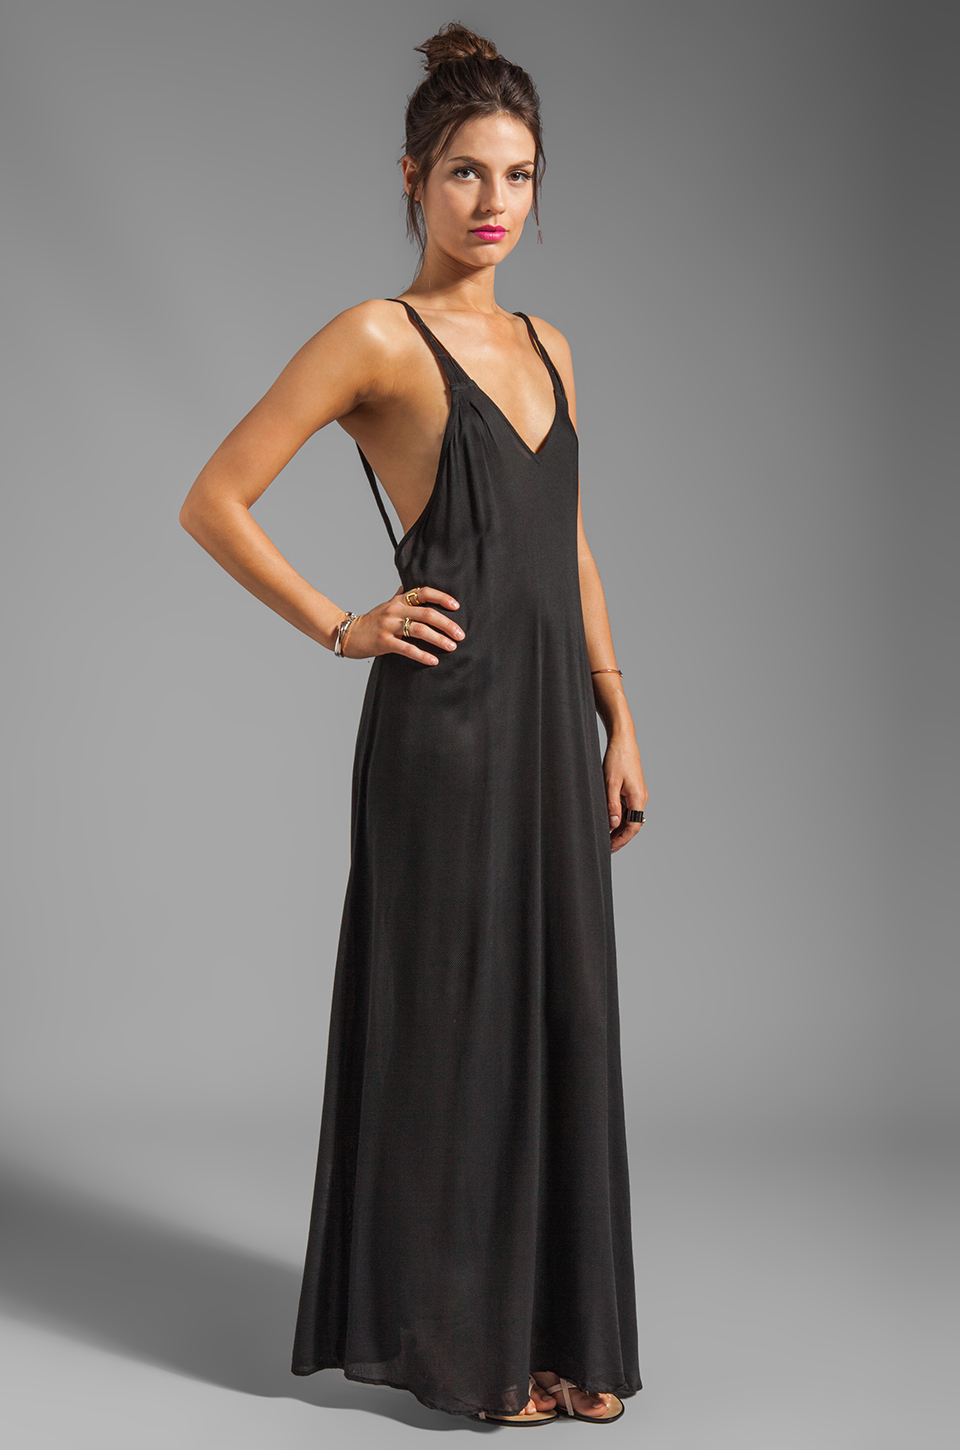 Acacia Swimwear Hana Backless Maxi Dress in Black - Lyst